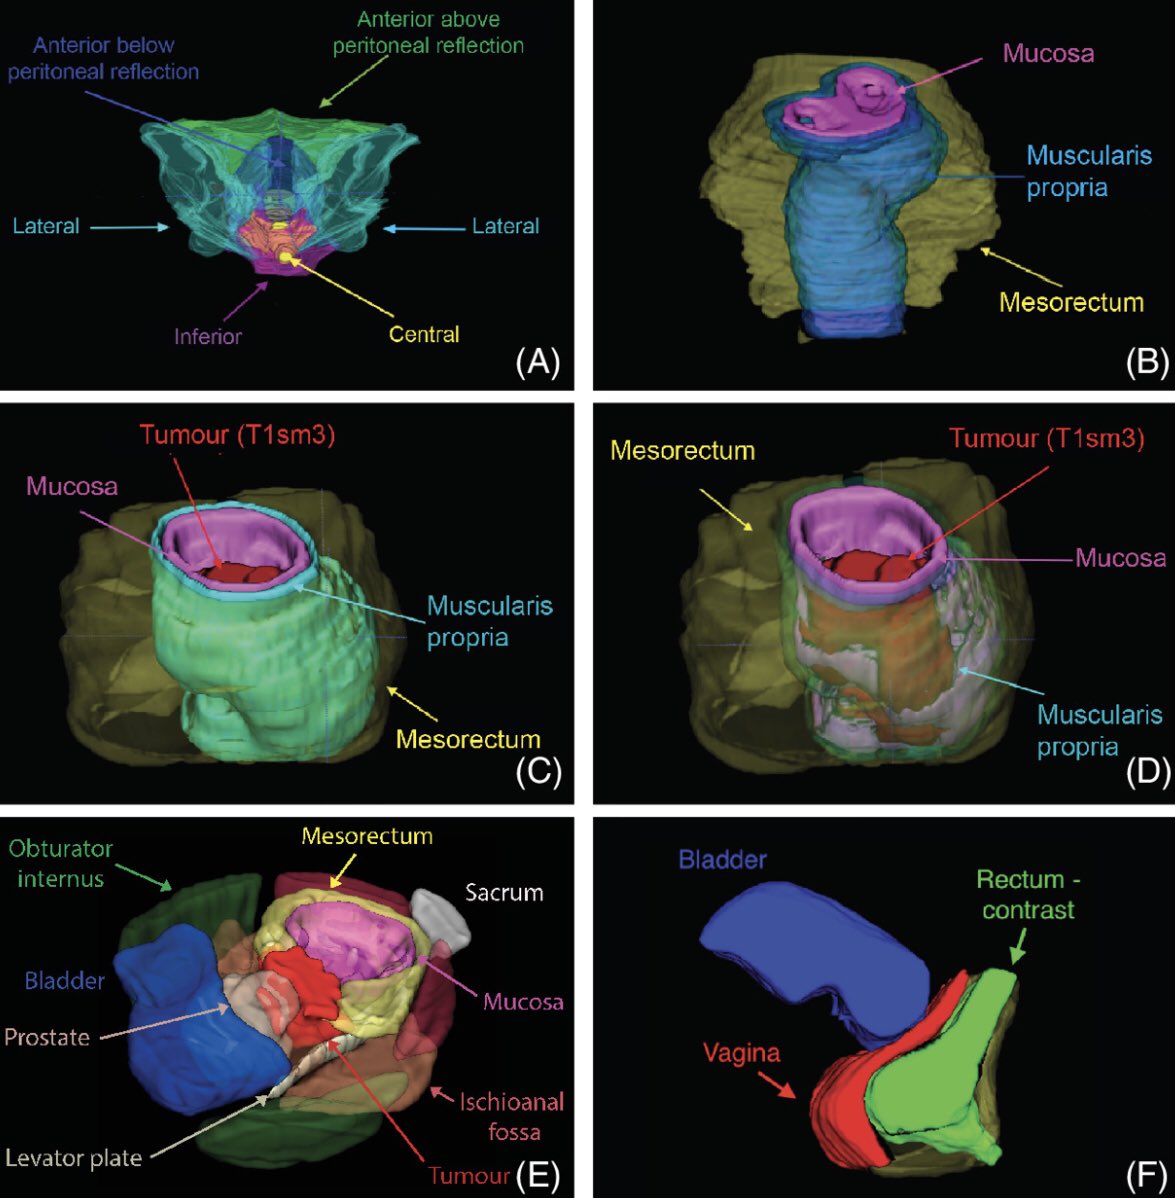 Rectal 3D MRI modelling for benign and malignant disease bjssjournals.onlinelibrary.wiley.com/doi/10.1002/bj… #surgicalplanning #training #patienteducation @ImperialSandC @ParisTekkis @DrOliverWarren @DrSarahCMills @shrasheed @ChelwestFT @royalmarsdenNHS